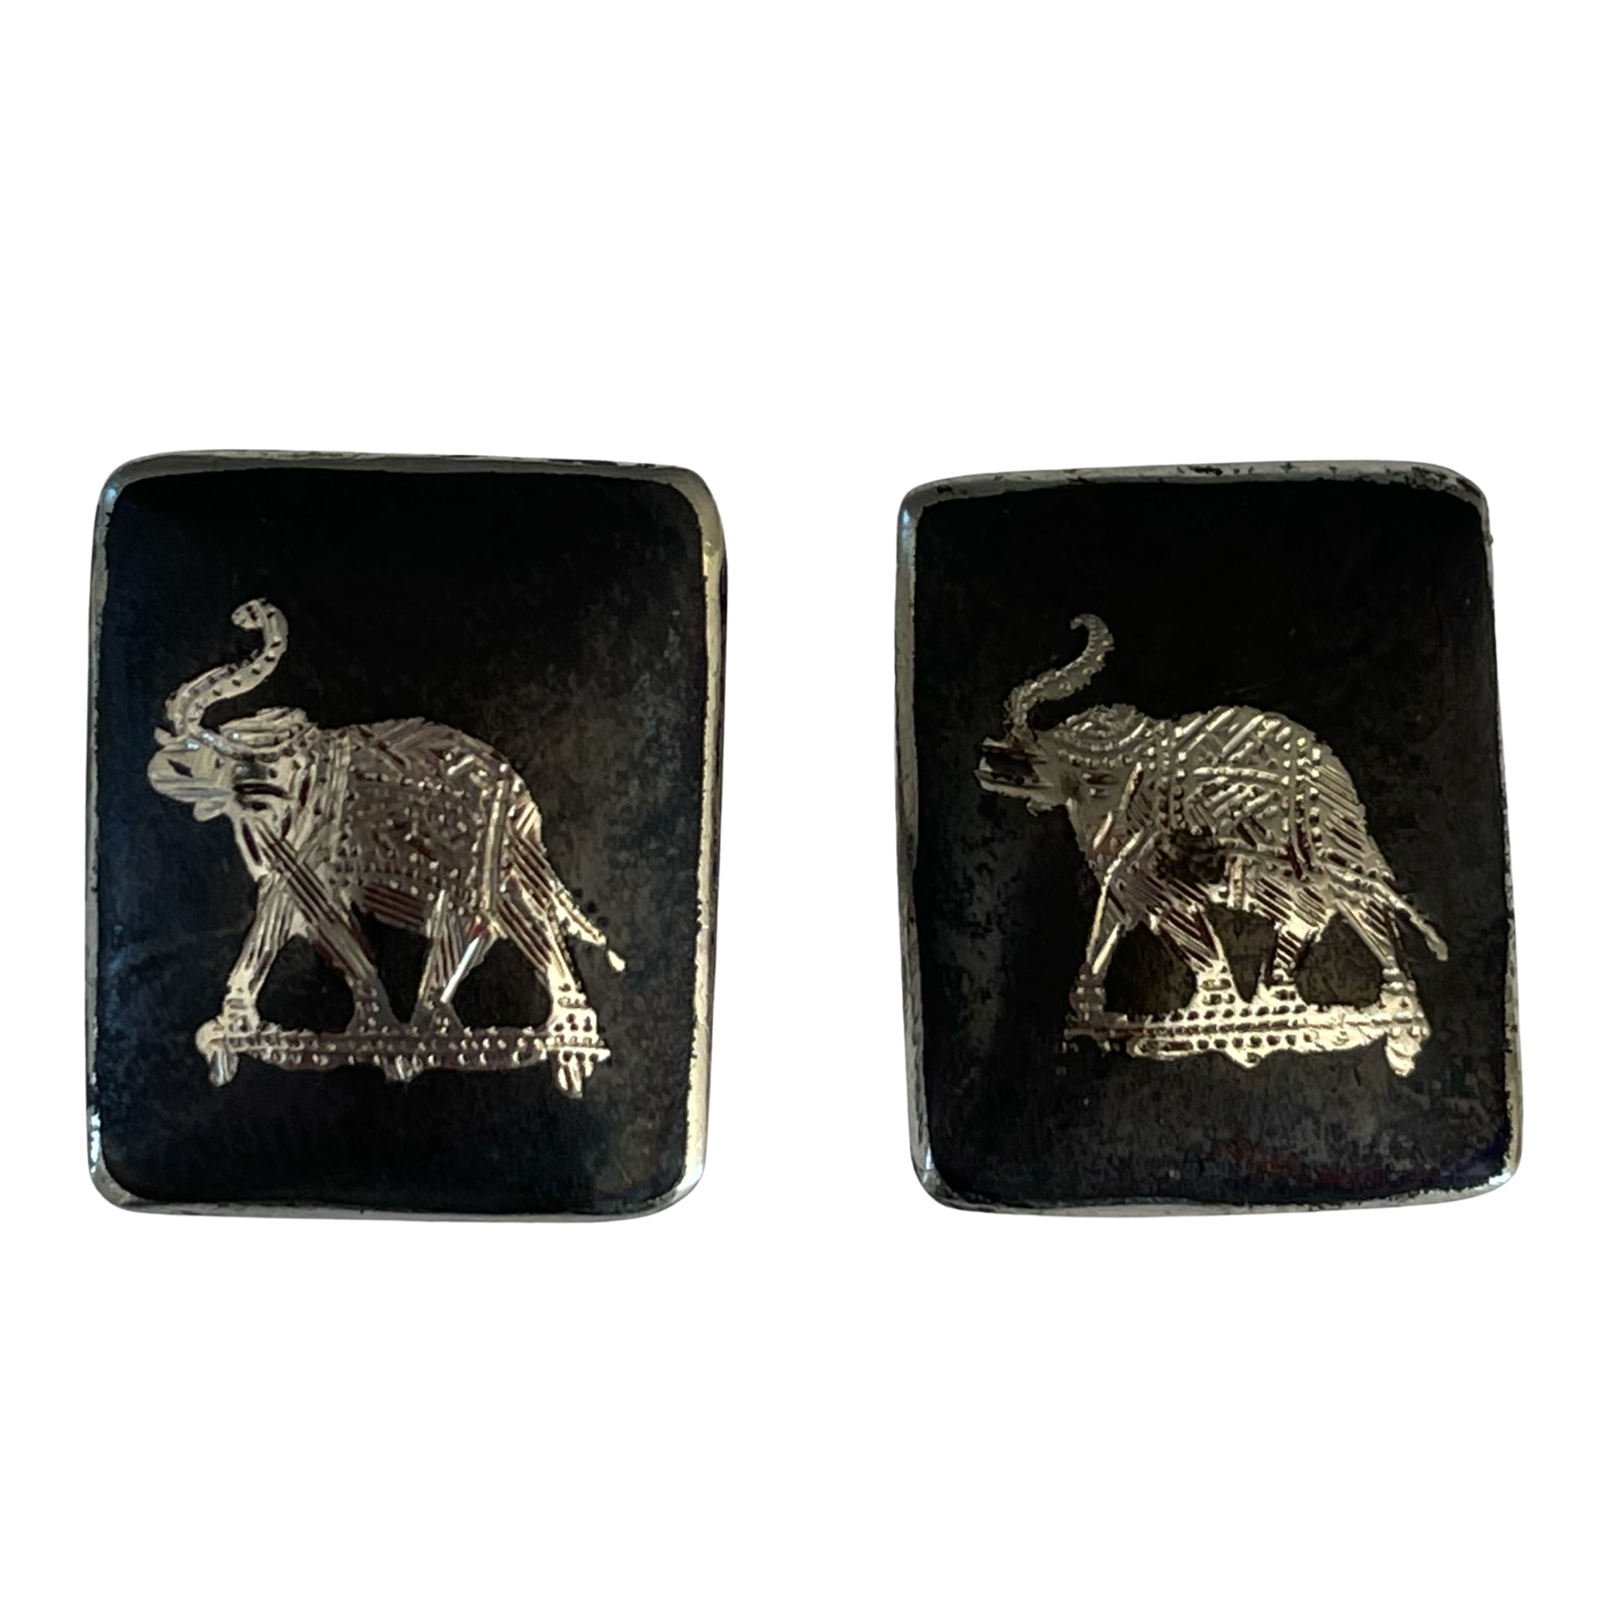 Primary image for Vintage Cufflinks India Elephants on Black Brushed Metal Finish